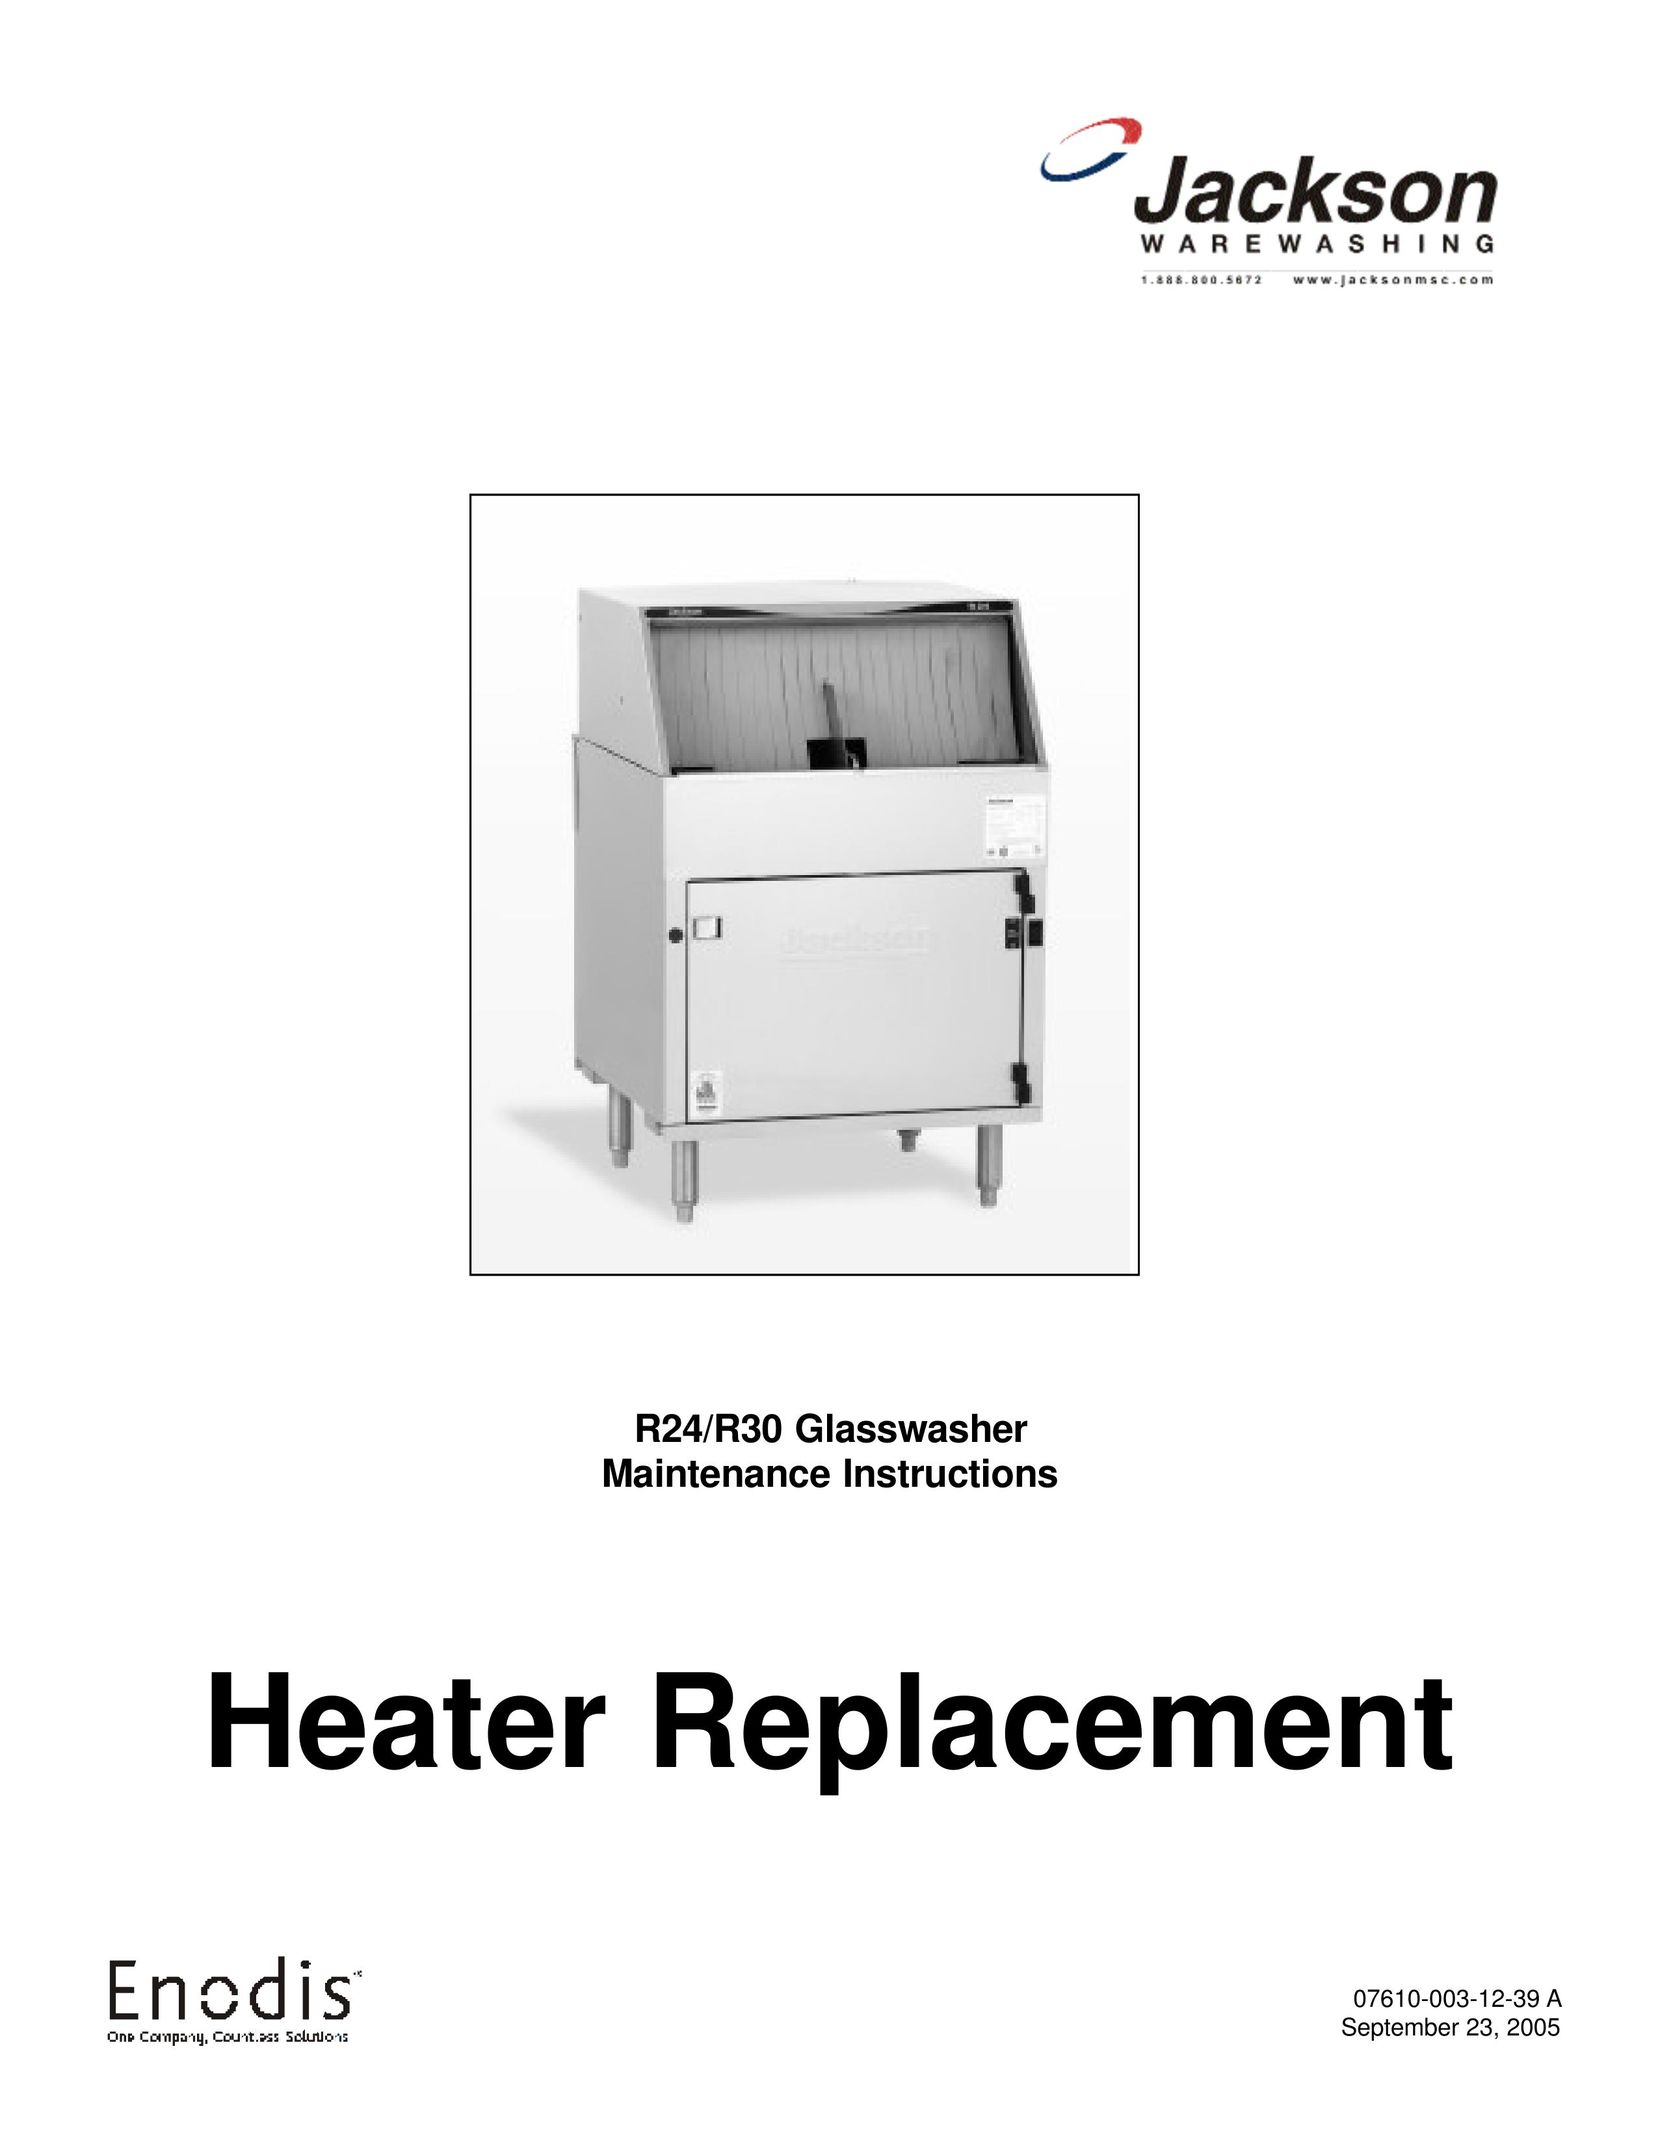 Jackson R24 Gas Heater User Manual